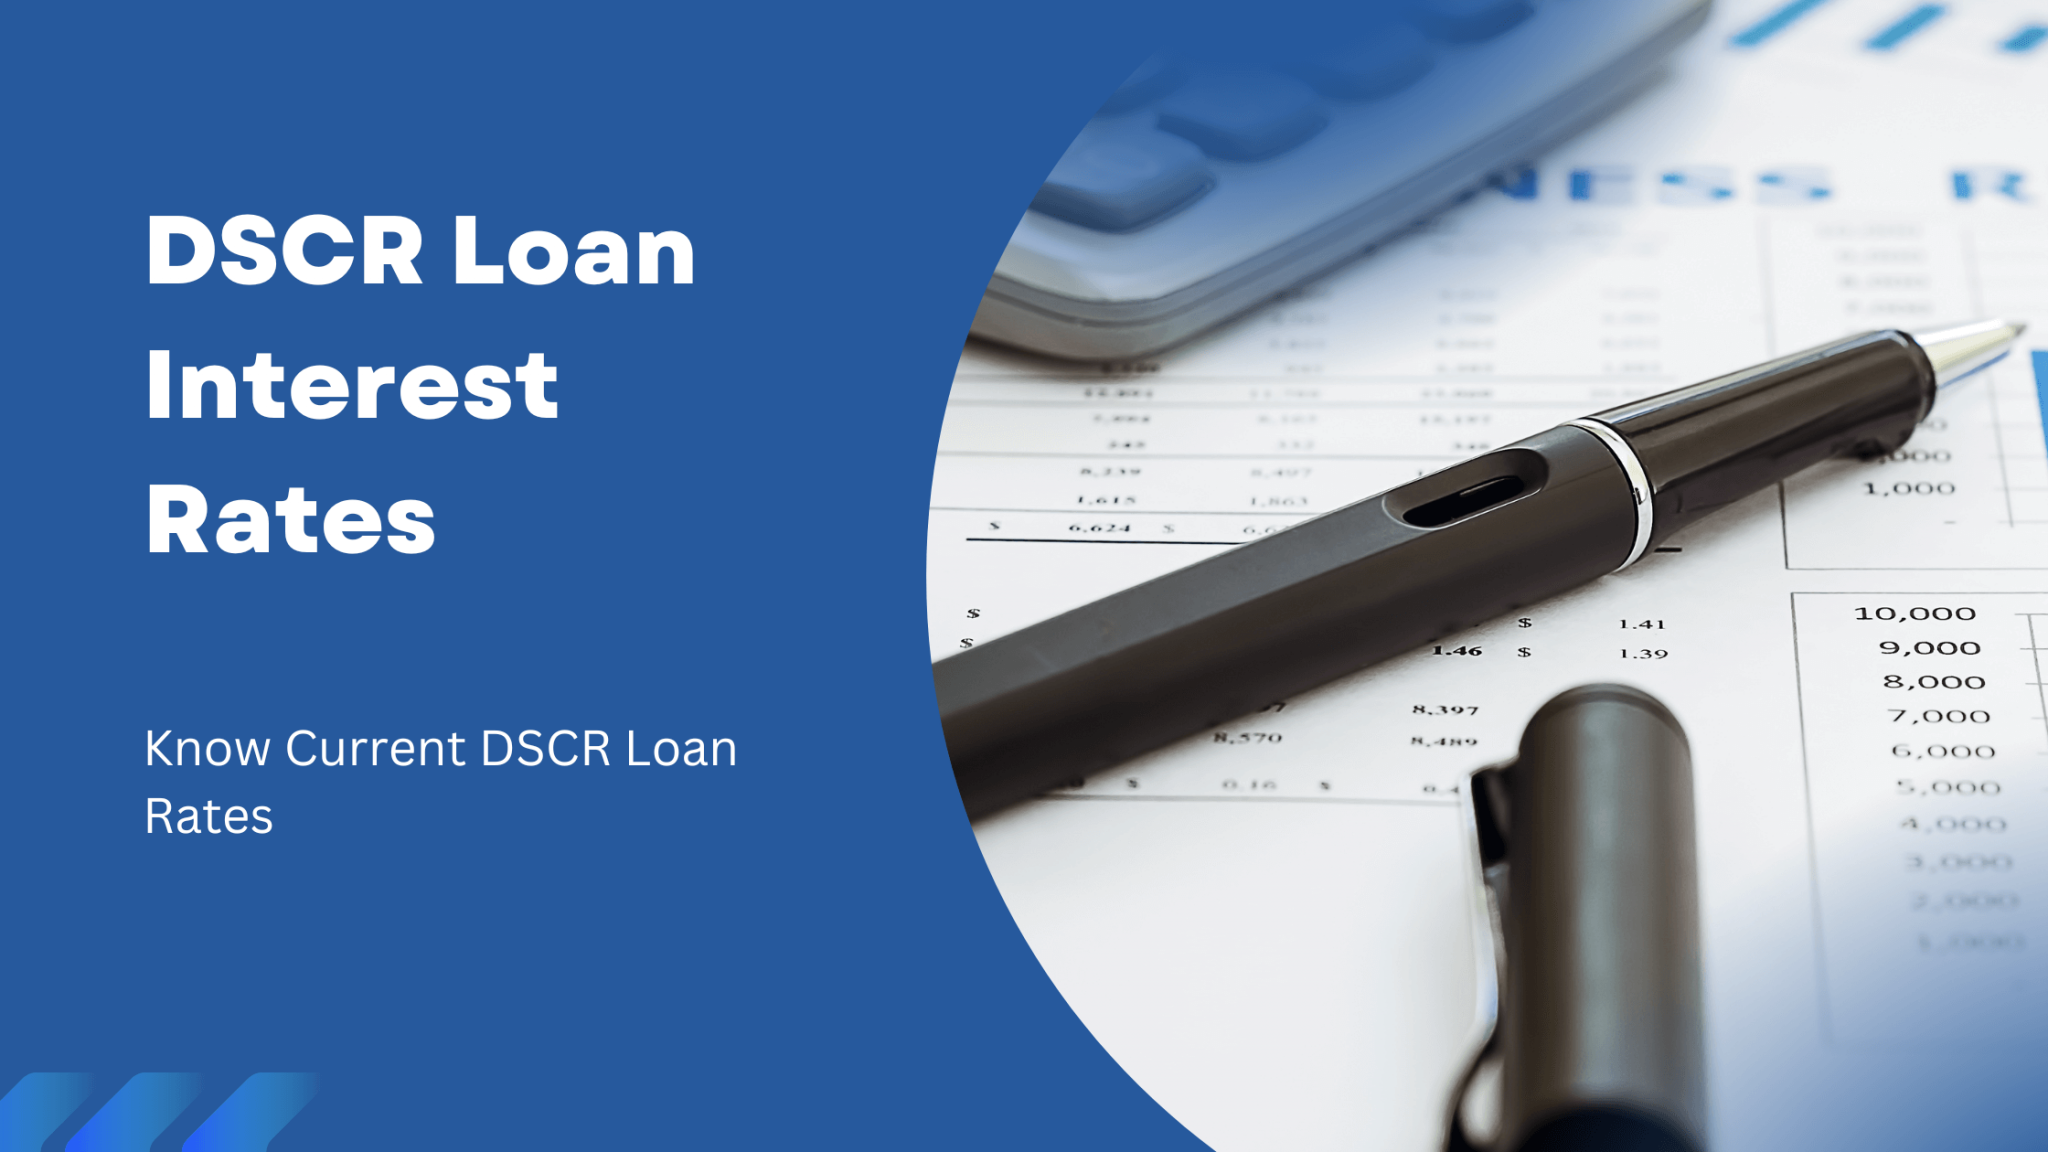 Tips for Getting DSCR Loans